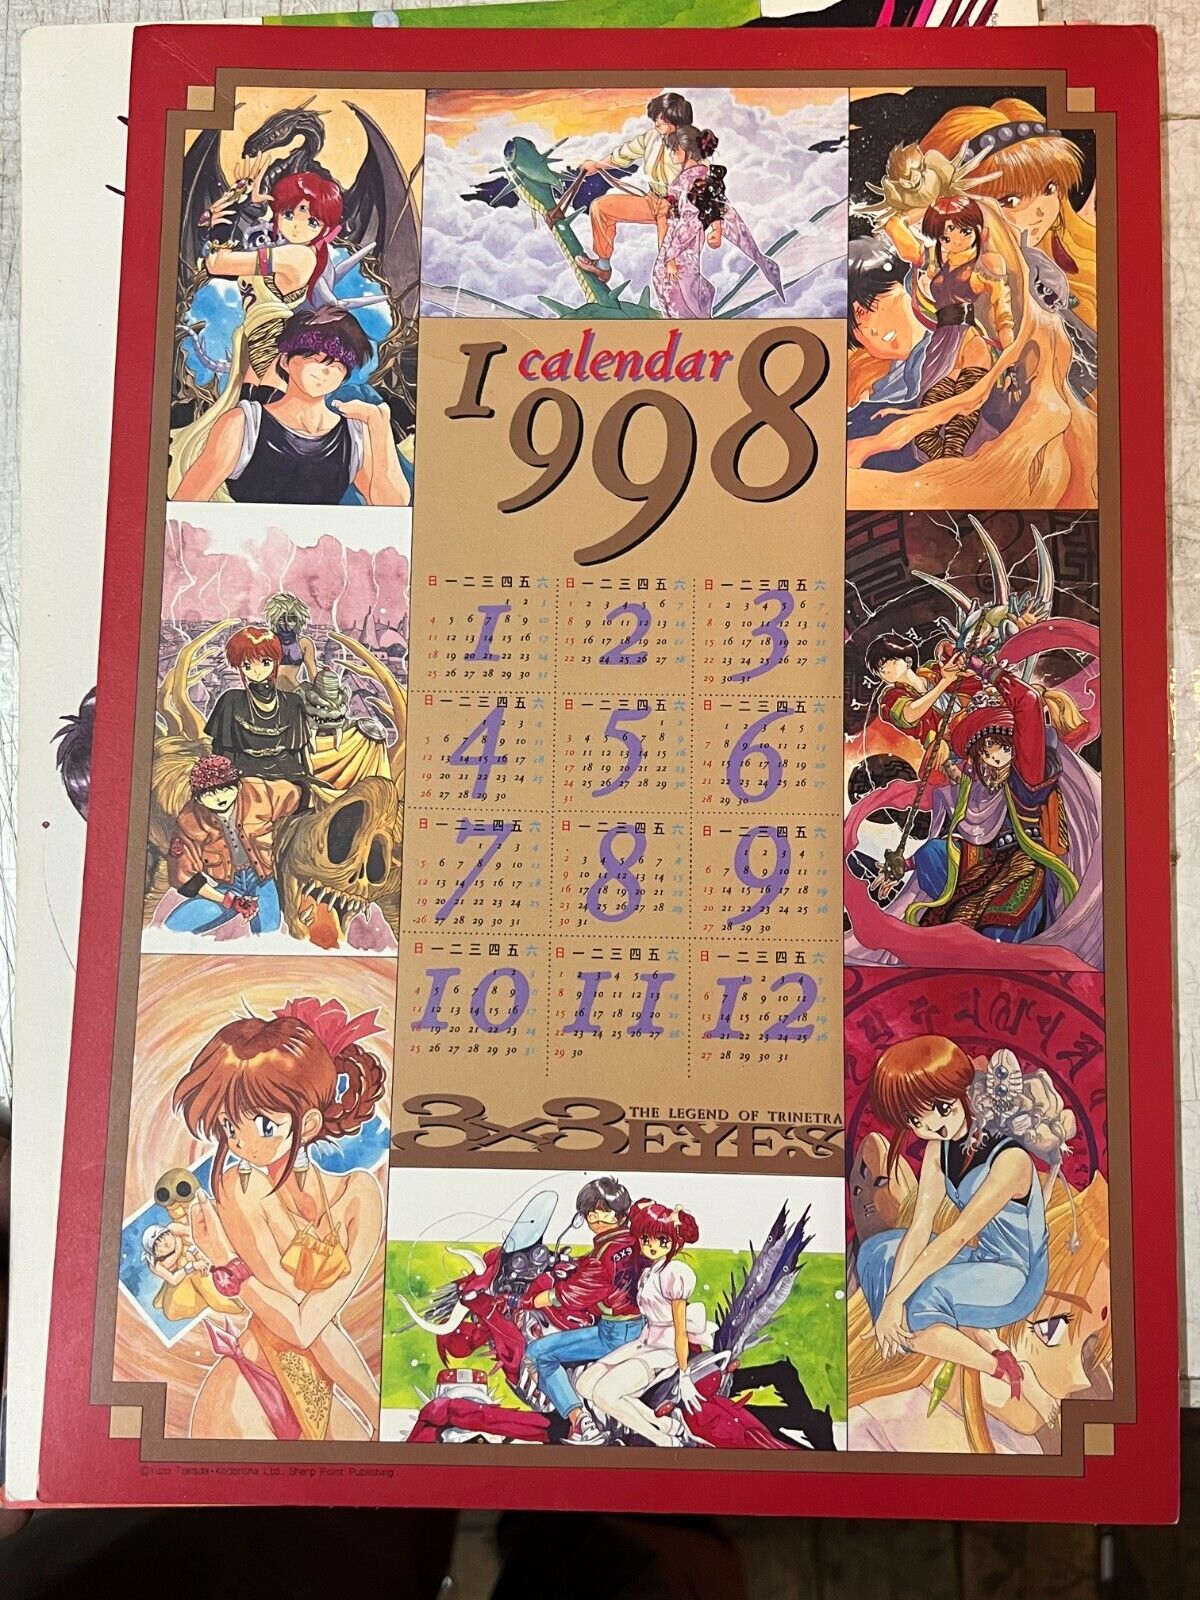 3x3 The Legend of Trinetra Eyes 1998 Japanese Import Anime Calendar Art Prints 